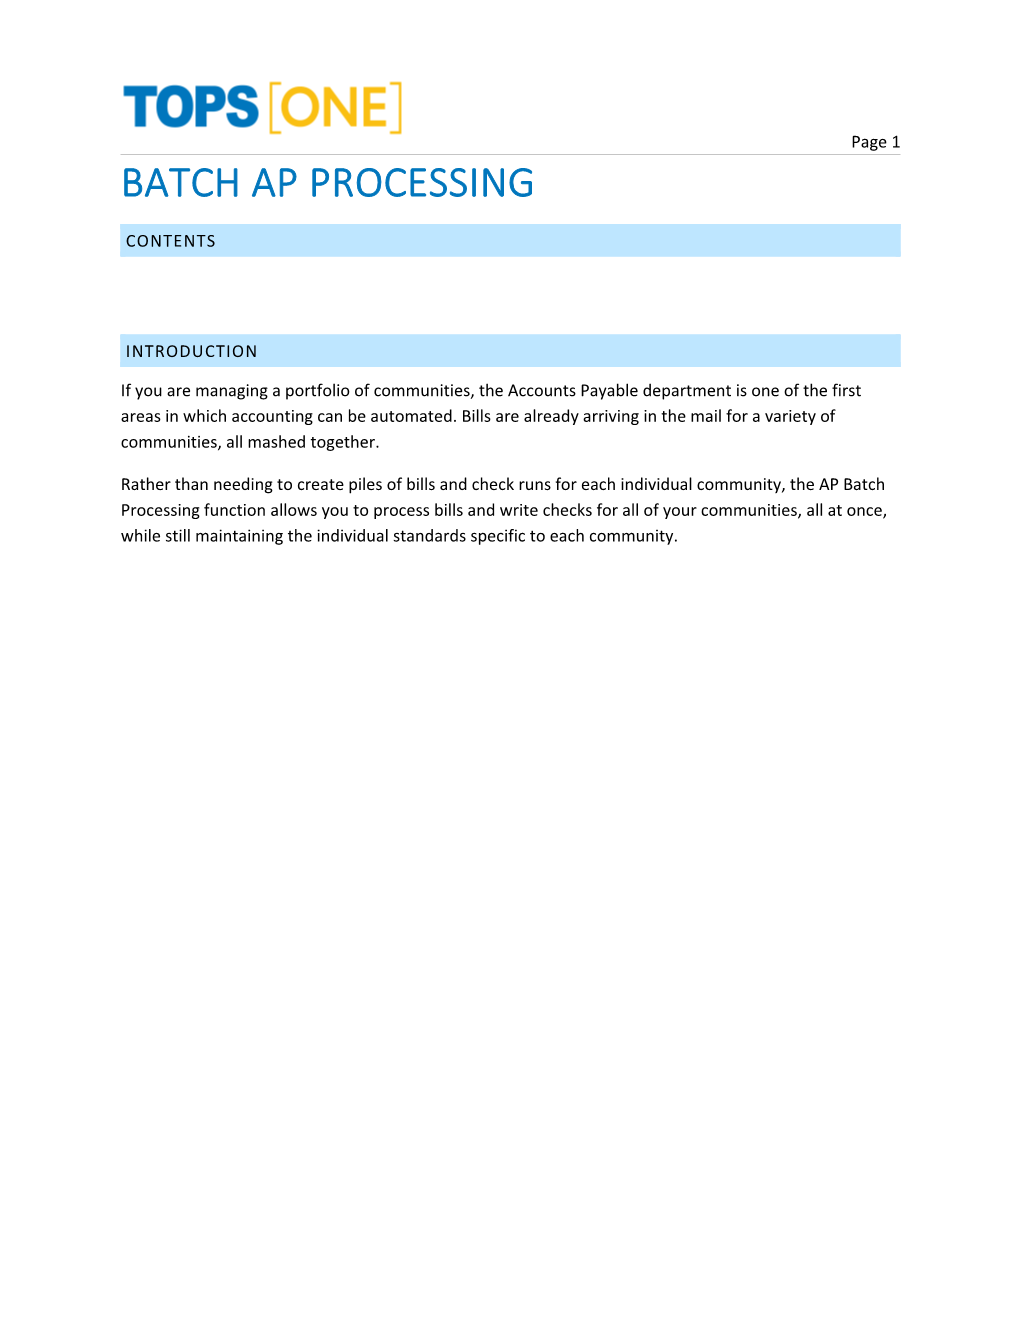 Batch AP Processing